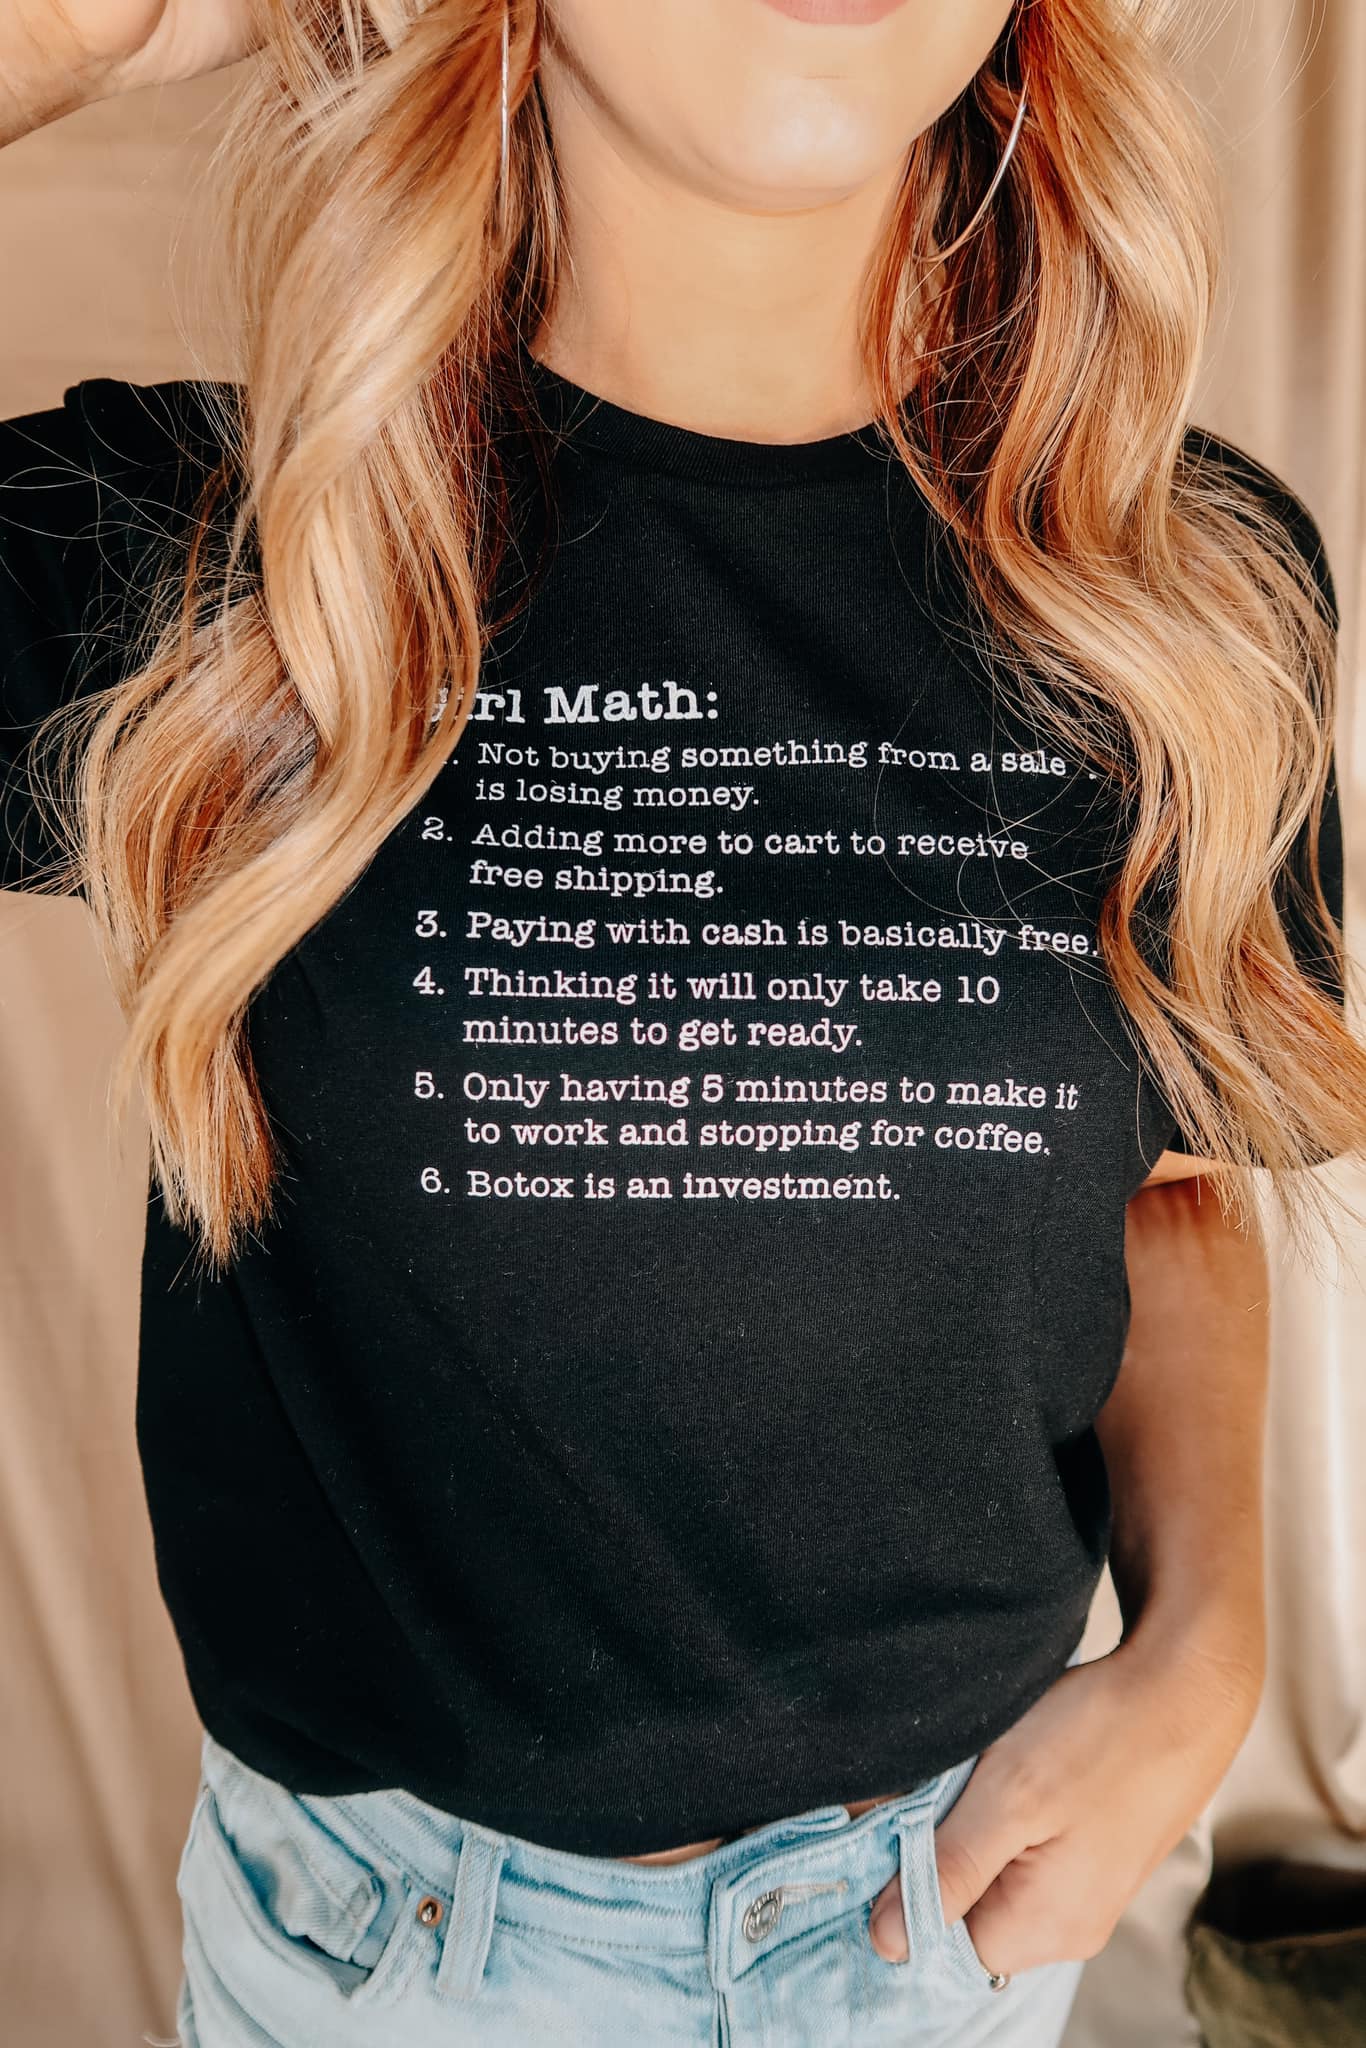 Girl Math Graphic Tee